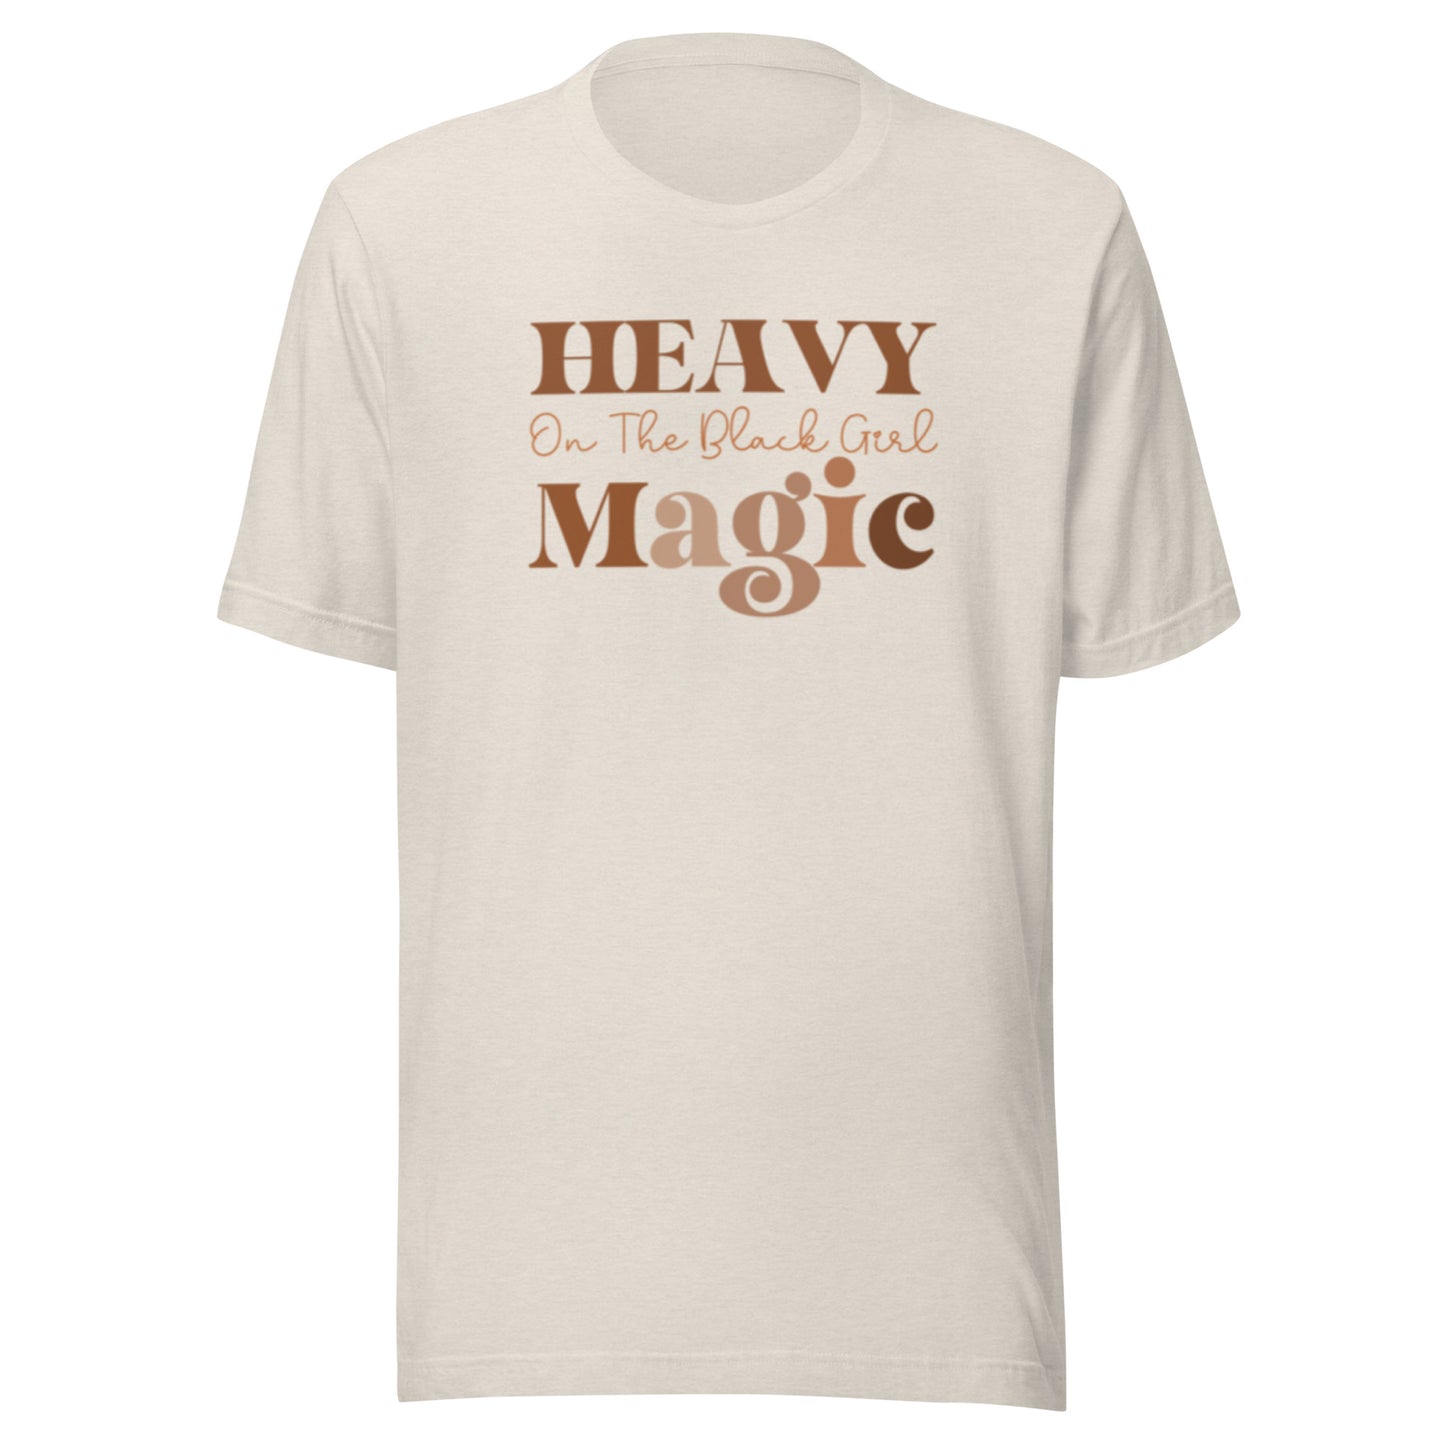 Heavy On The Black Girl Magic Unisex t-shirt